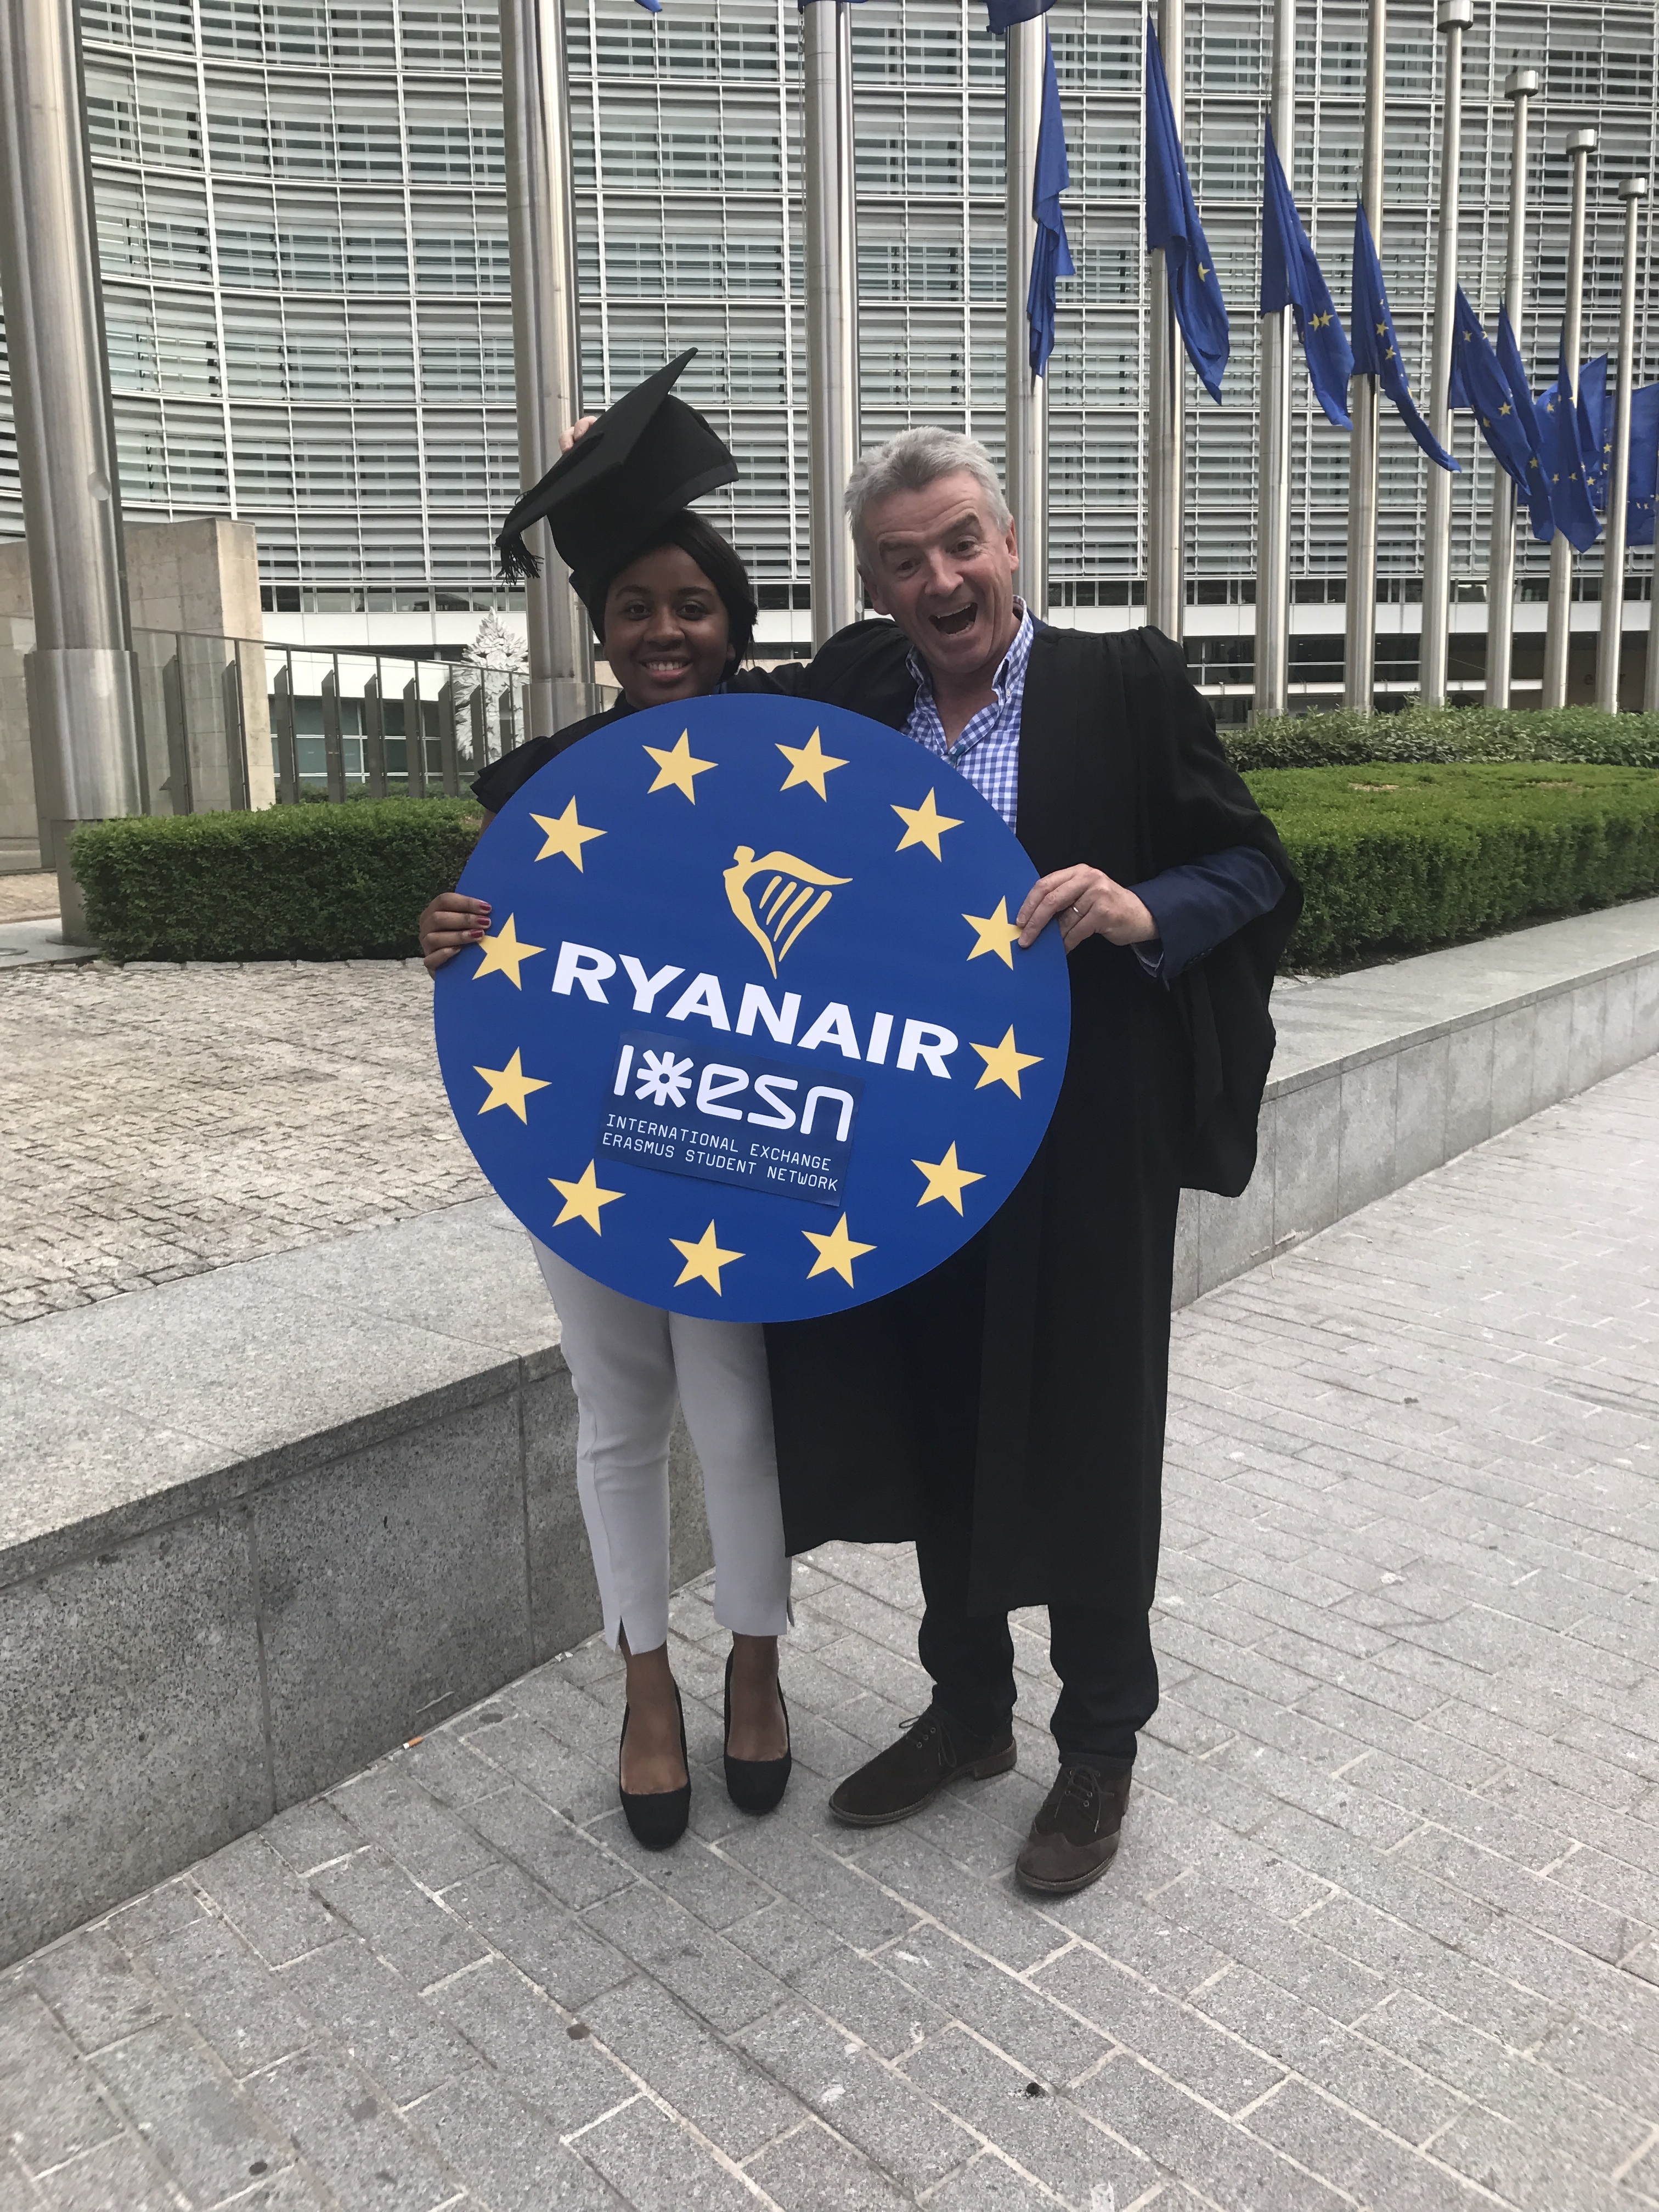 Ryanair To Partner Erasmus Student Network